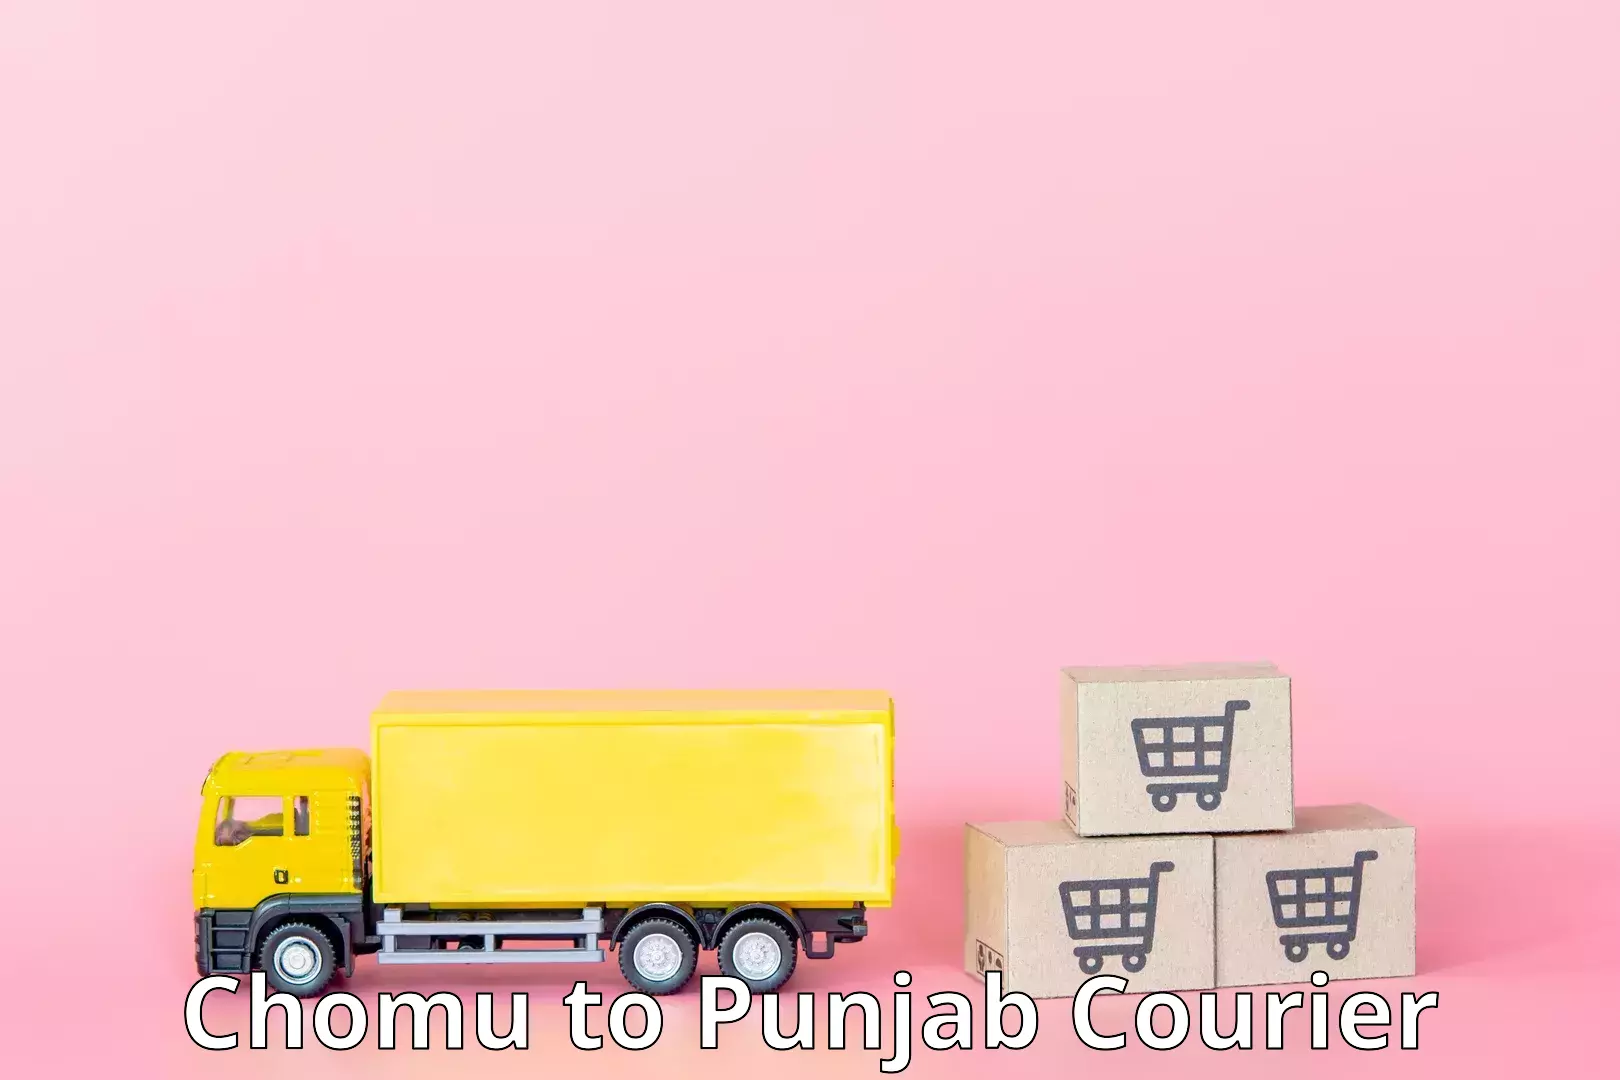 Doorstep delivery service Chomu to Punjab